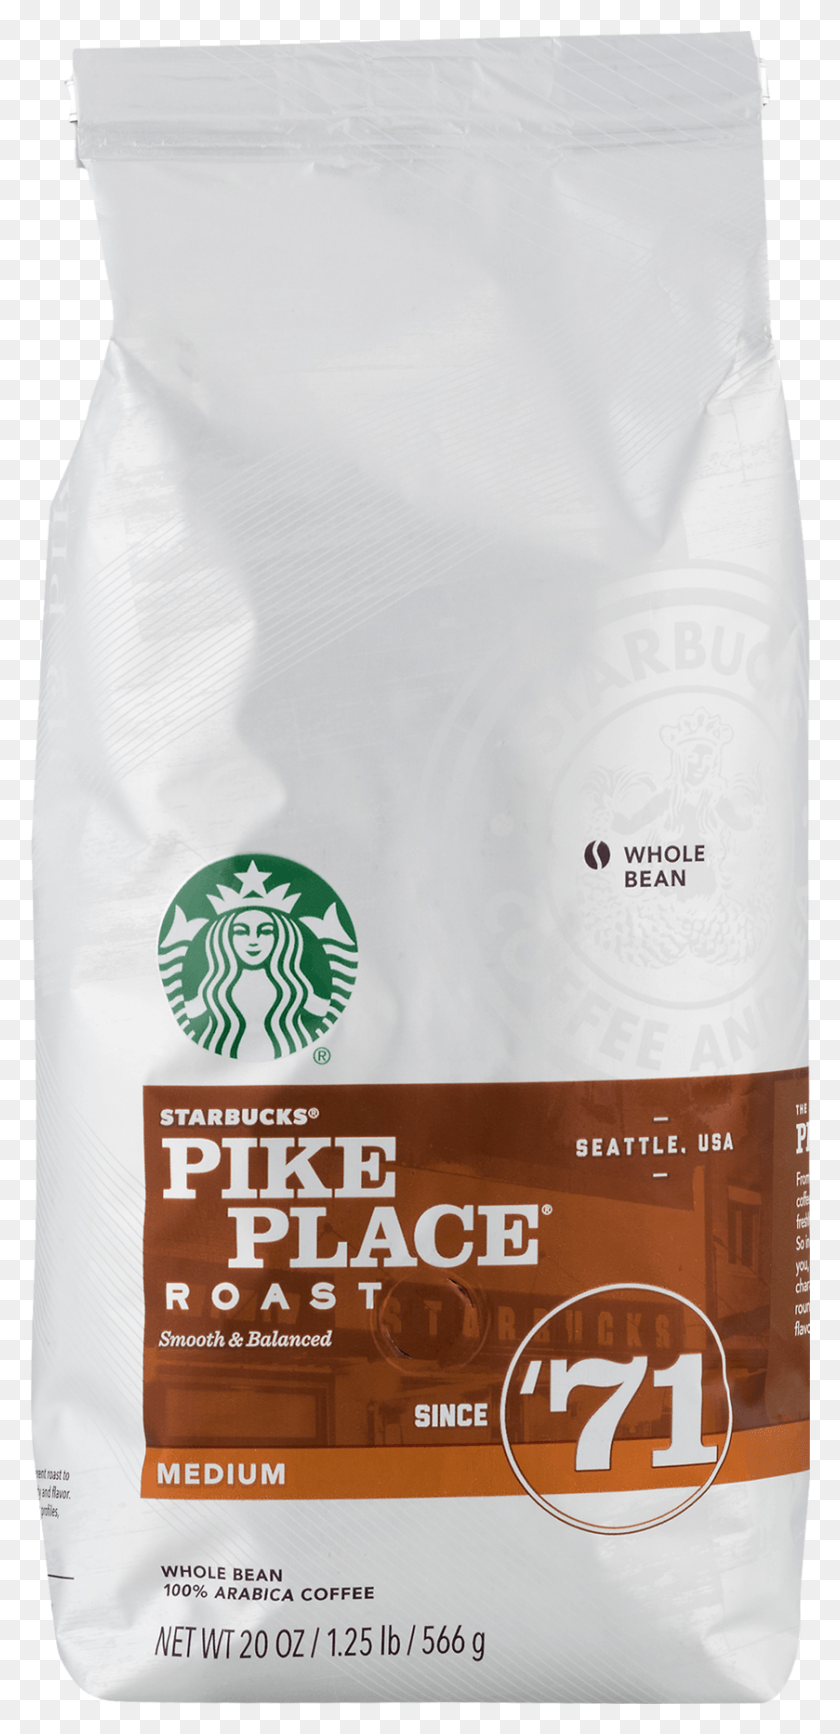 839x1801 Descargar Png Starbucks Pike Place Roast Medio Asado Frijoles Enteros Gatito, Word, Comida, Harina Hd Png